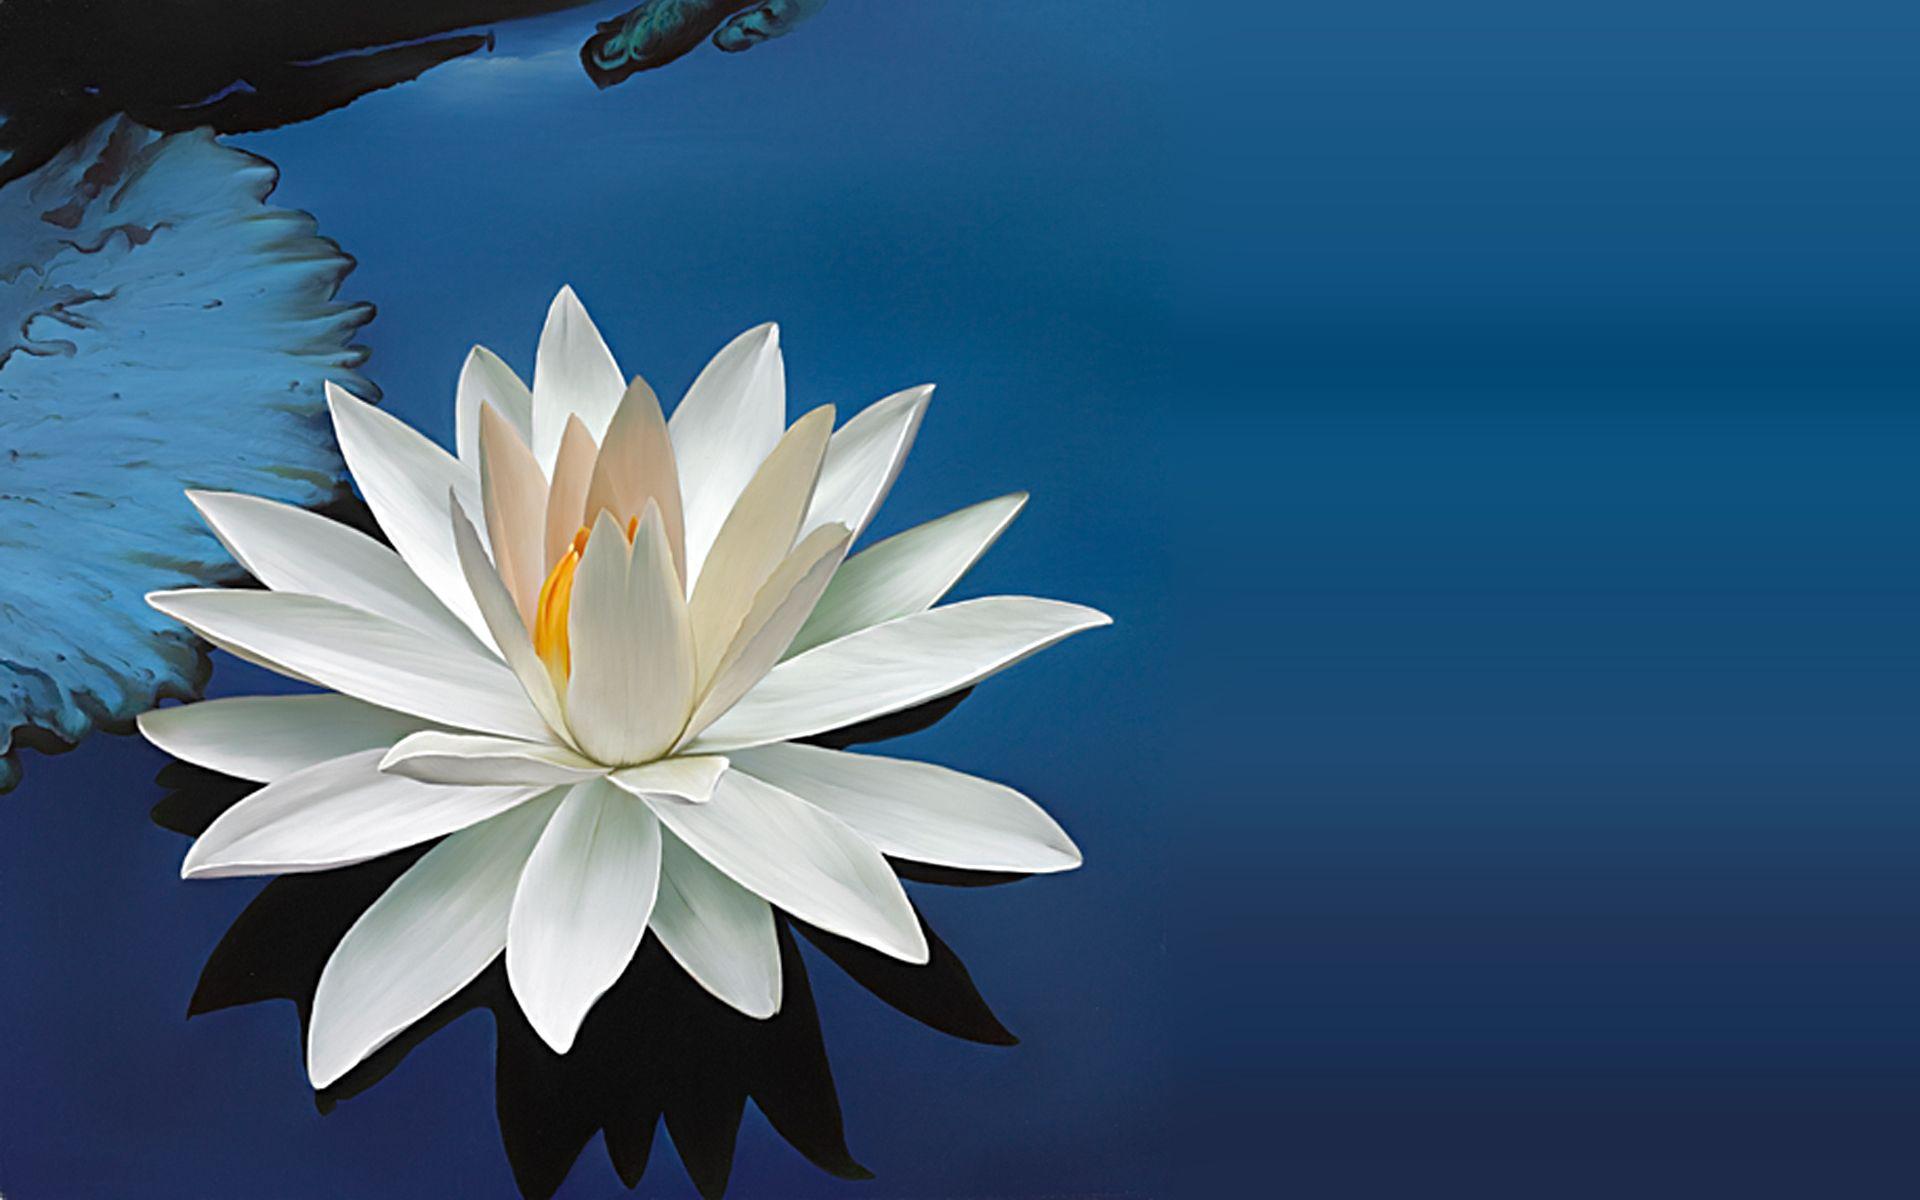 Lotus Flower Wallpaper For iPhone Free Download > SubWallpaper